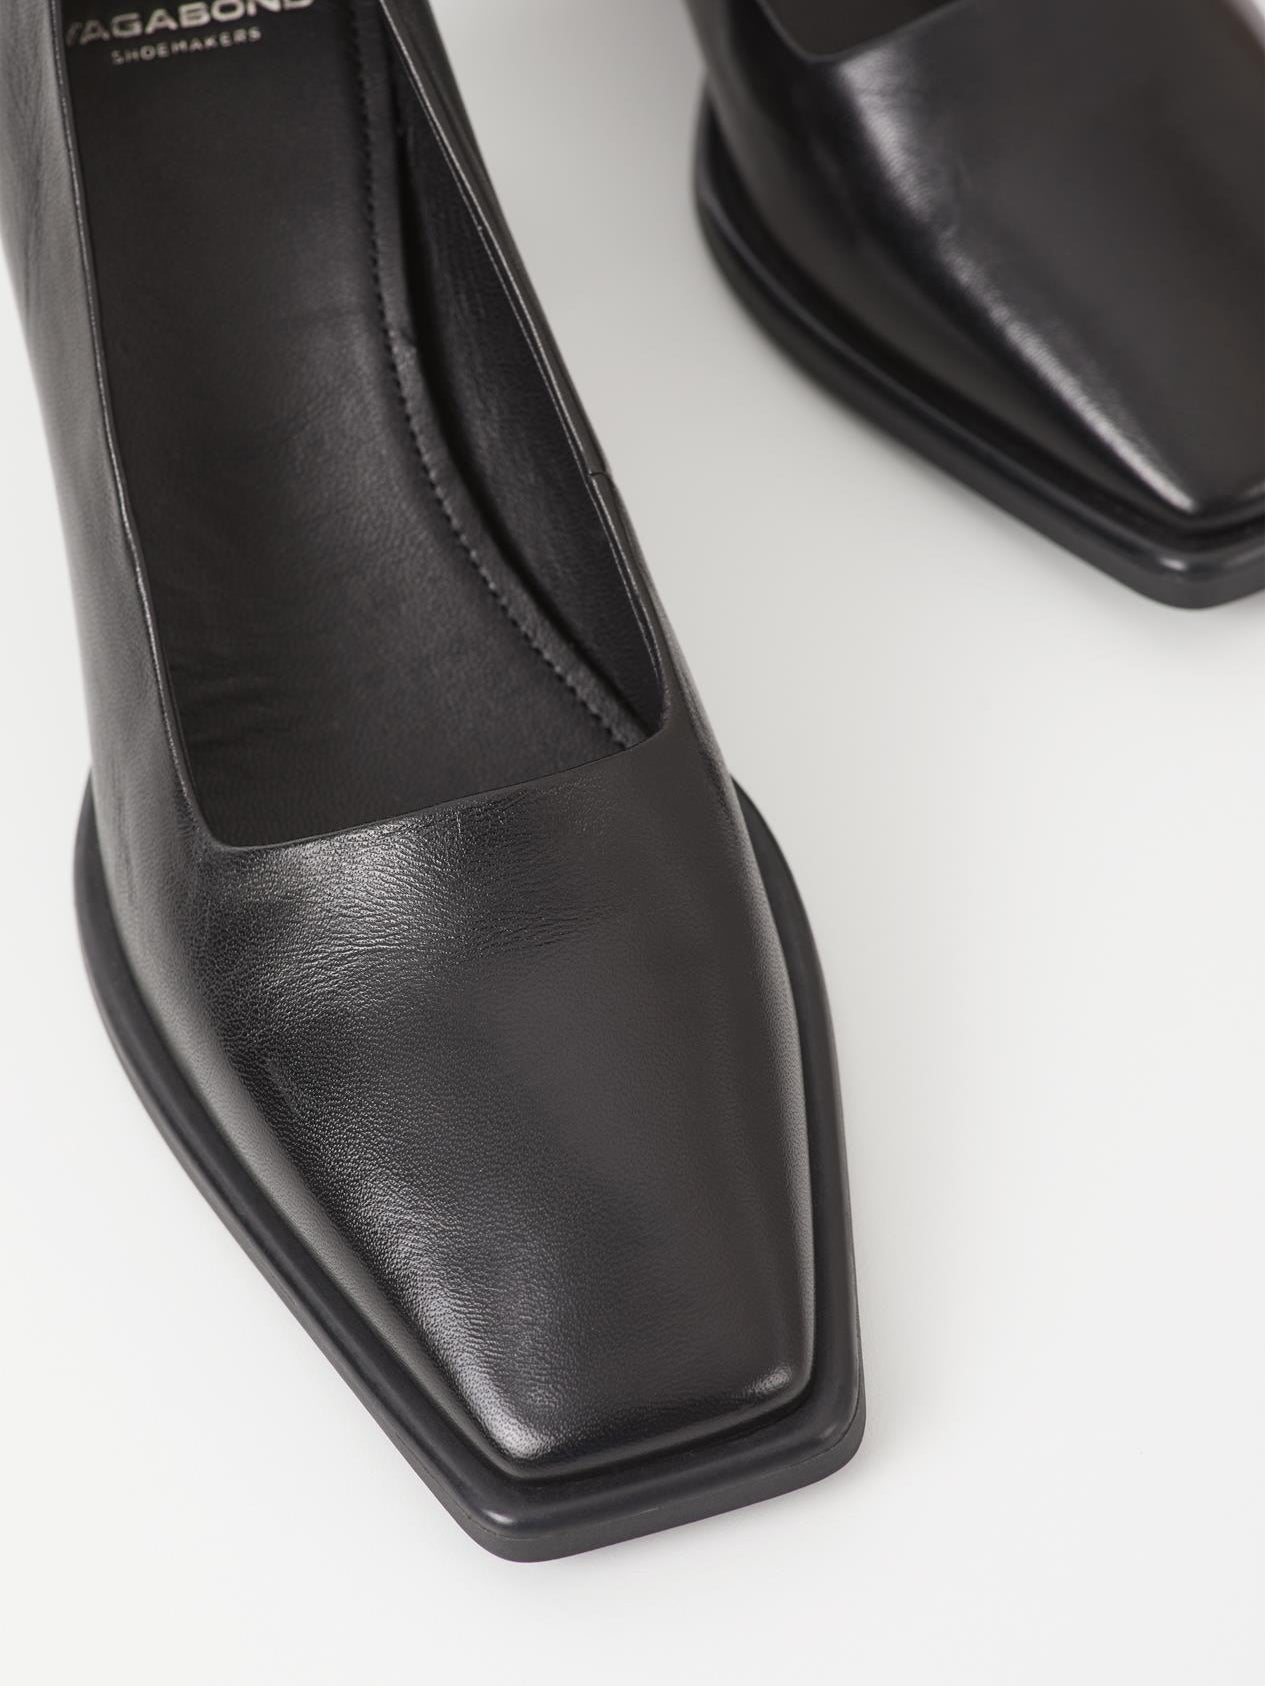 
                  
                    Vagabond Shoemakers / Hedda / Shoe
                  
                